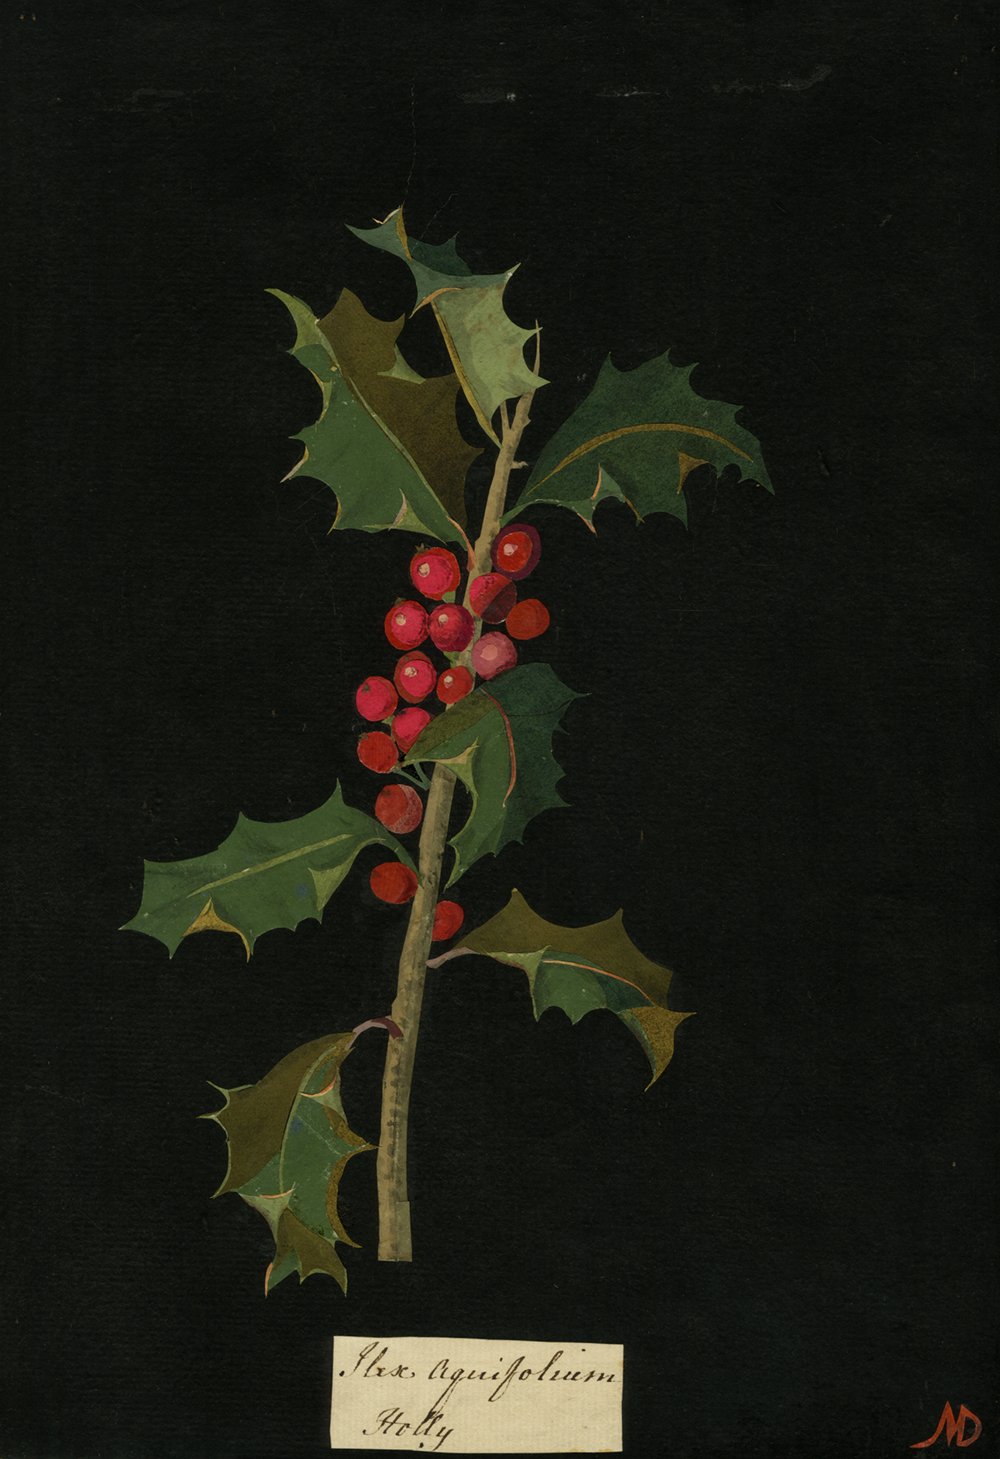 Çobanpüskülü (orig. "Holly") by Mary Delany - 1775 - 26,8 x 18,9 cm British Museum